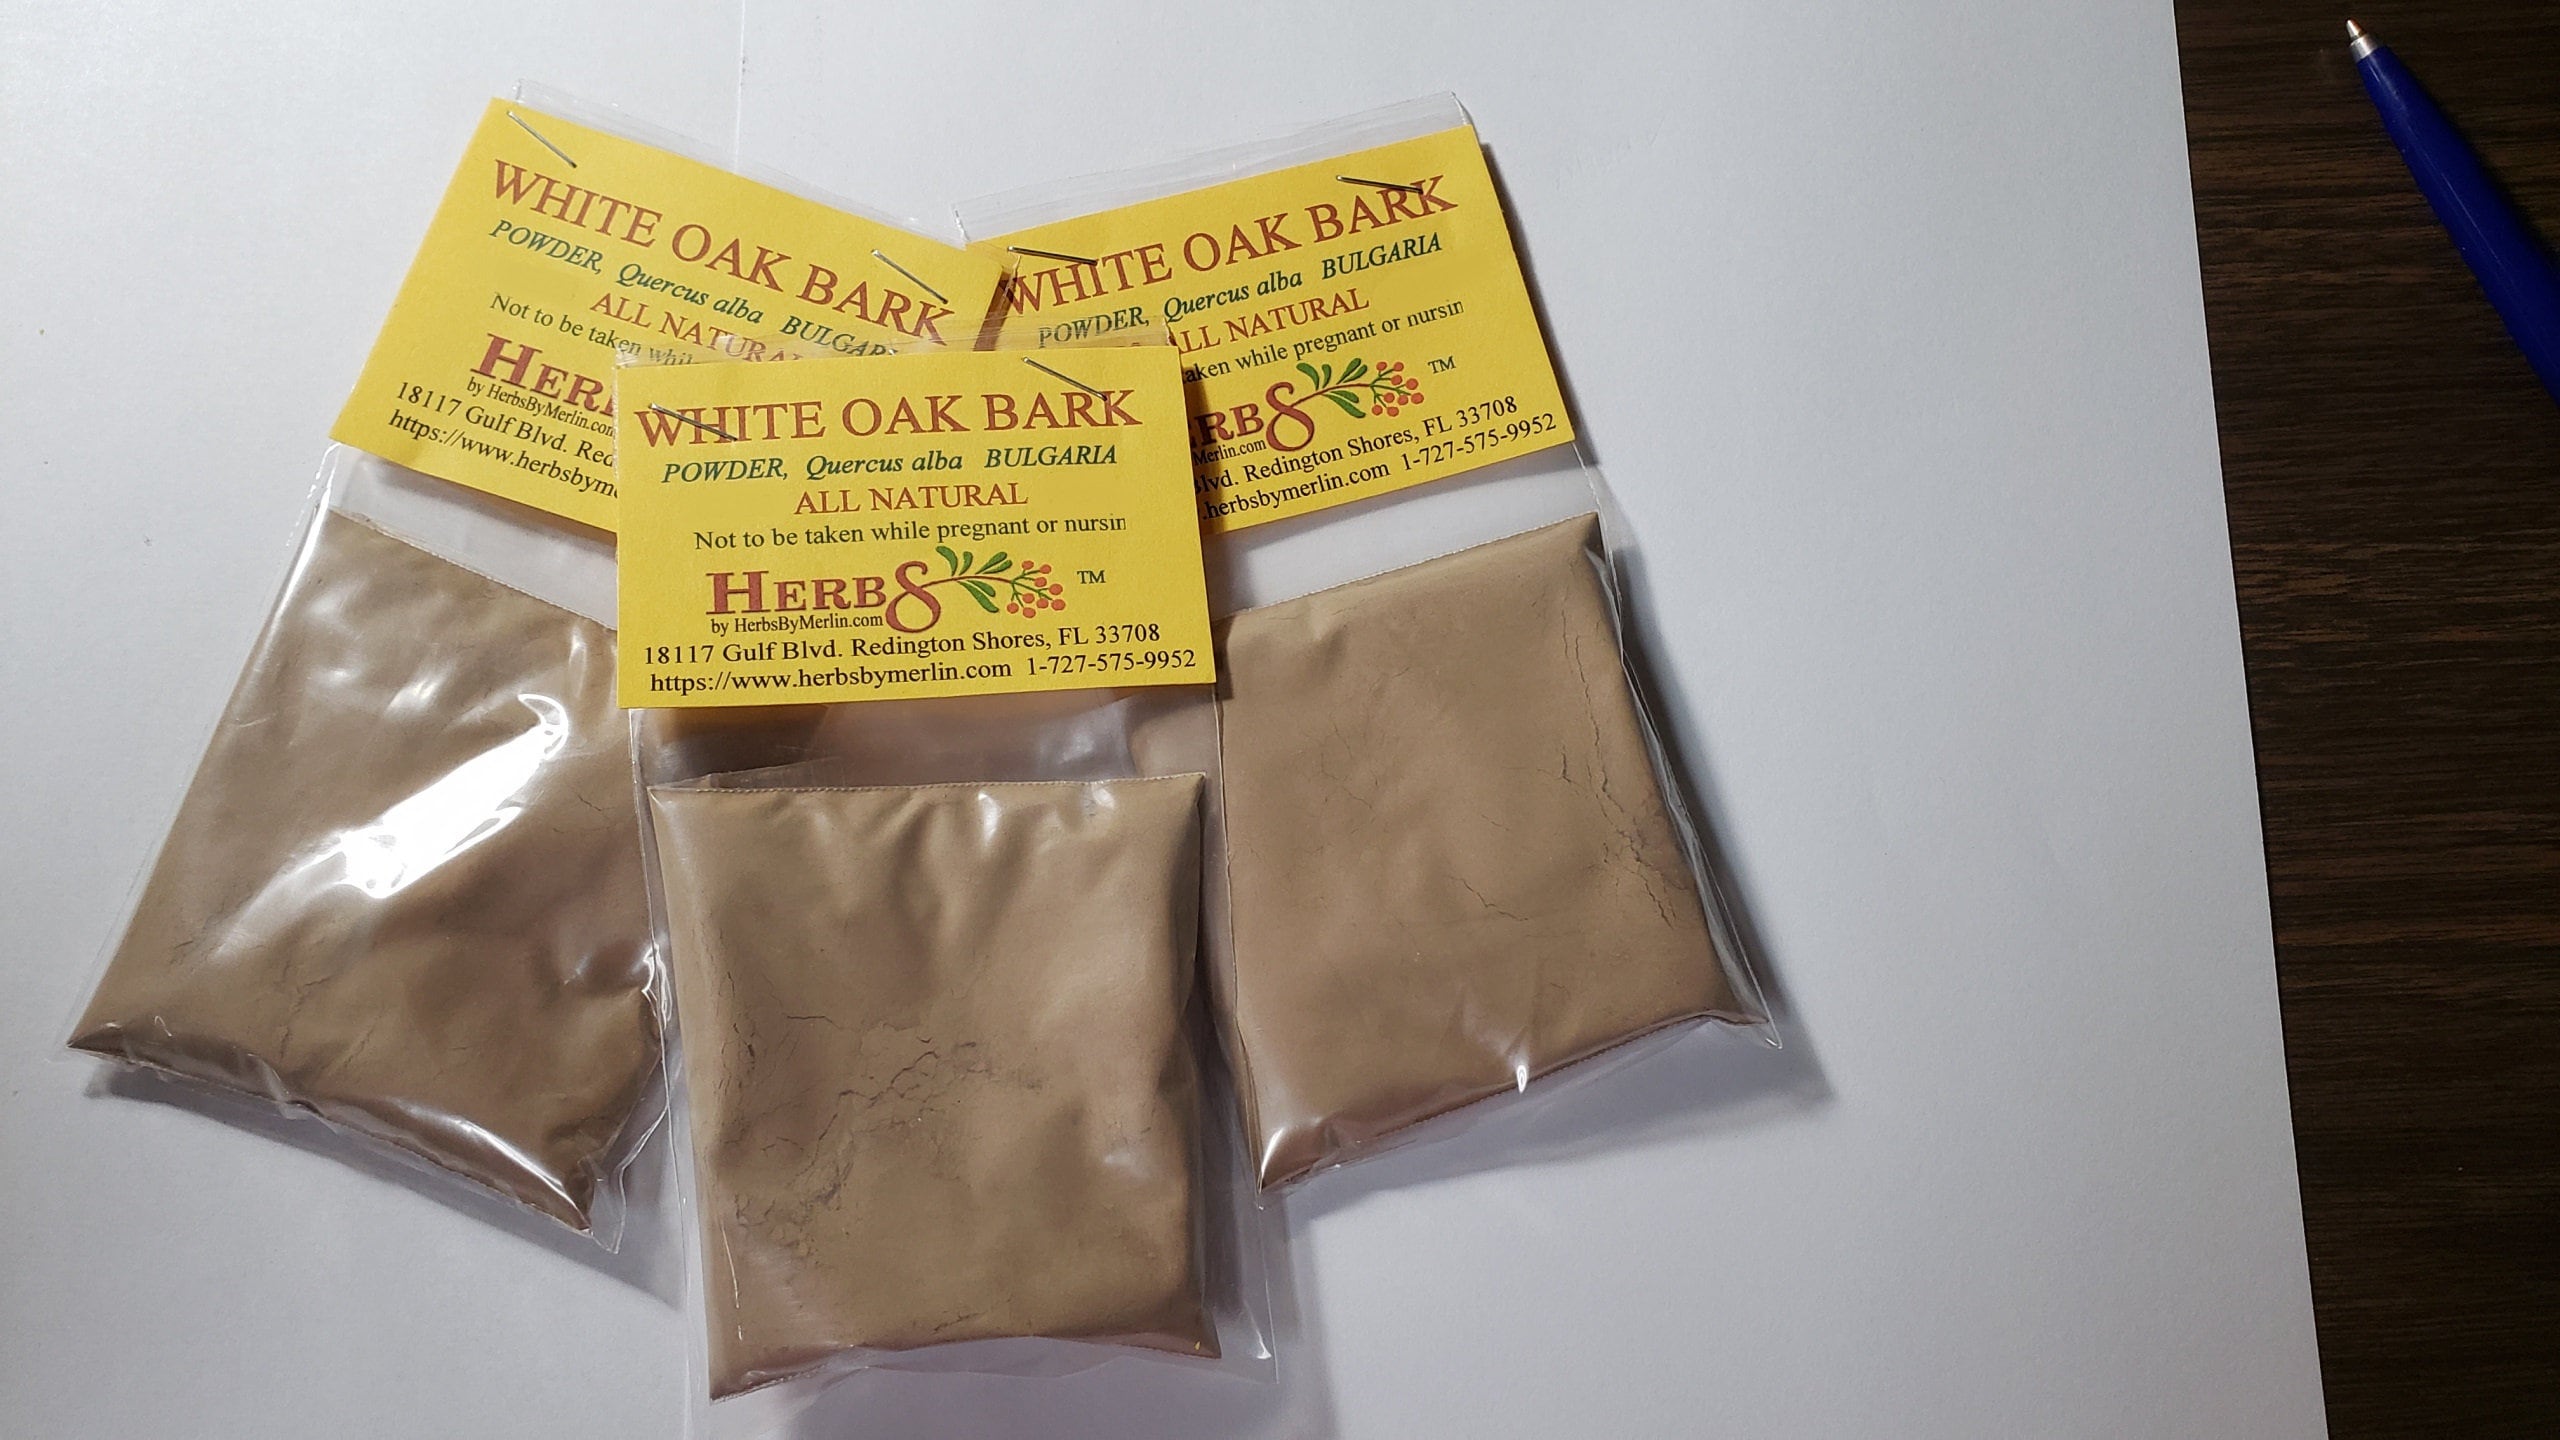 1-lb Red Iron Oxide Powder –